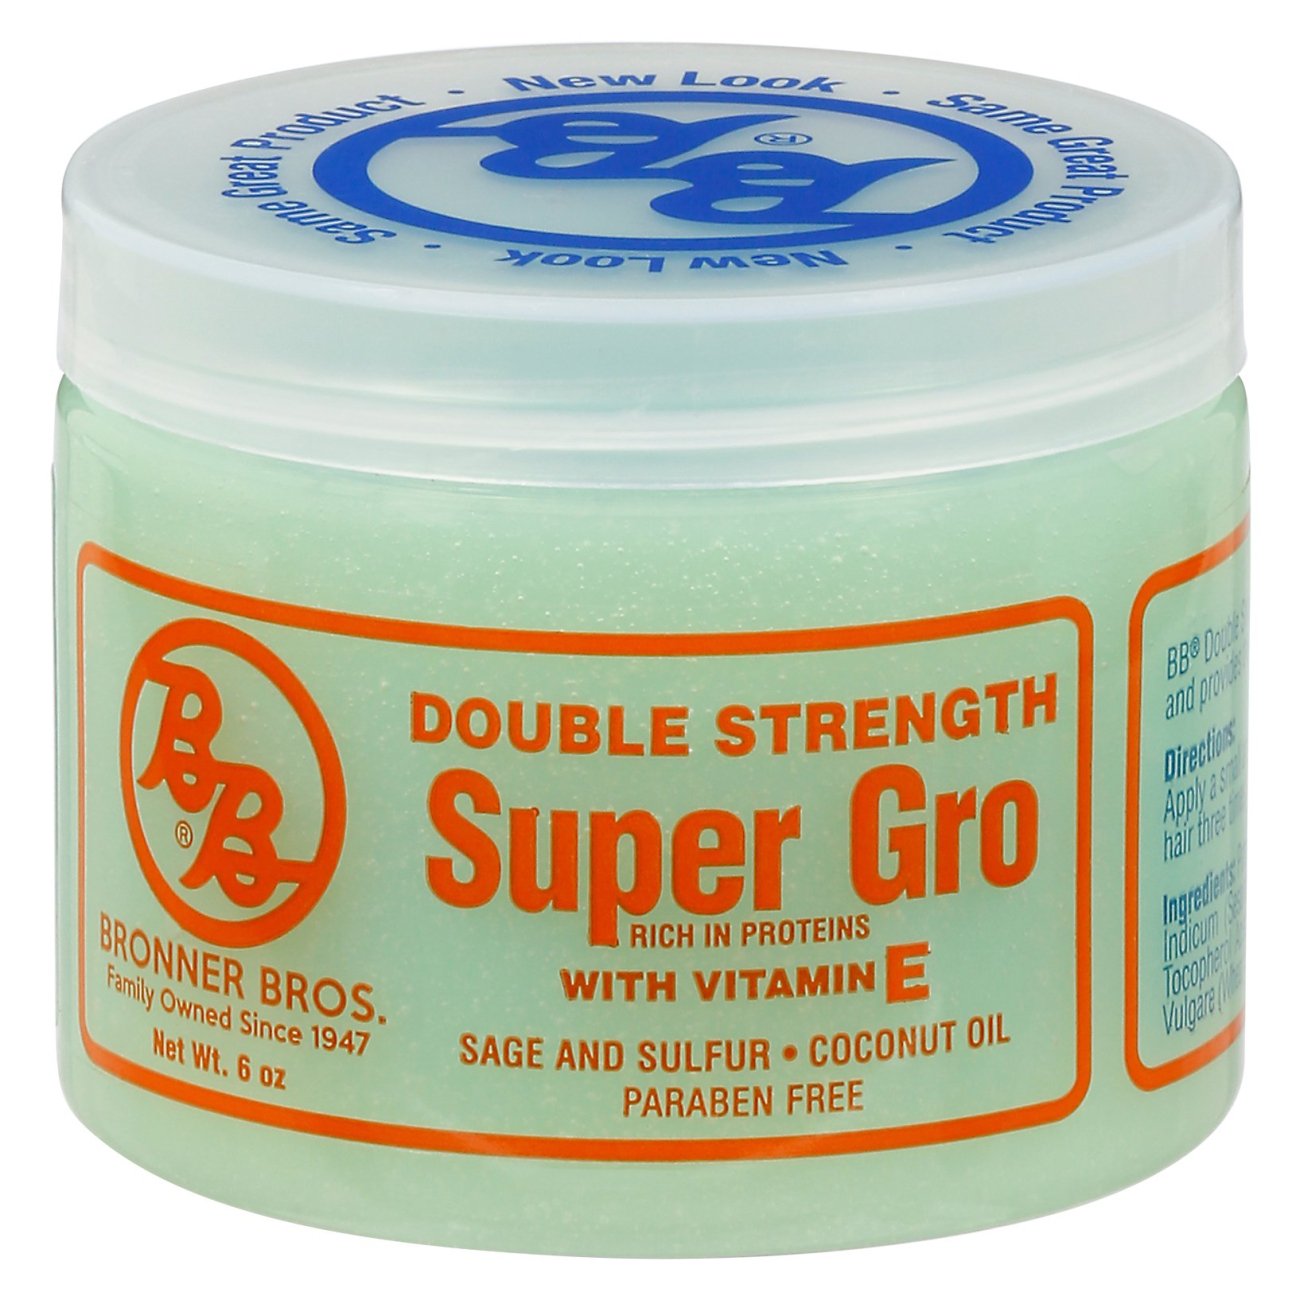 Bronner Bros Double Strength Super Gro with Vitamin E - Shop Shampoo ...